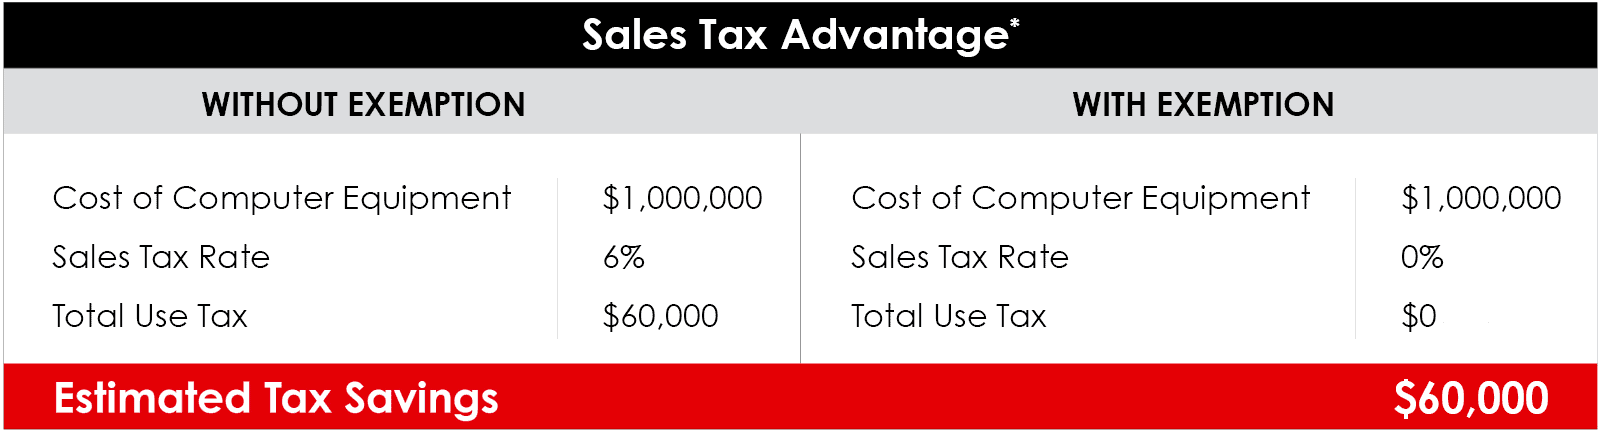 Georgia Sales Tax Exemption Comparison | $60,000 Estimated Tax Savings